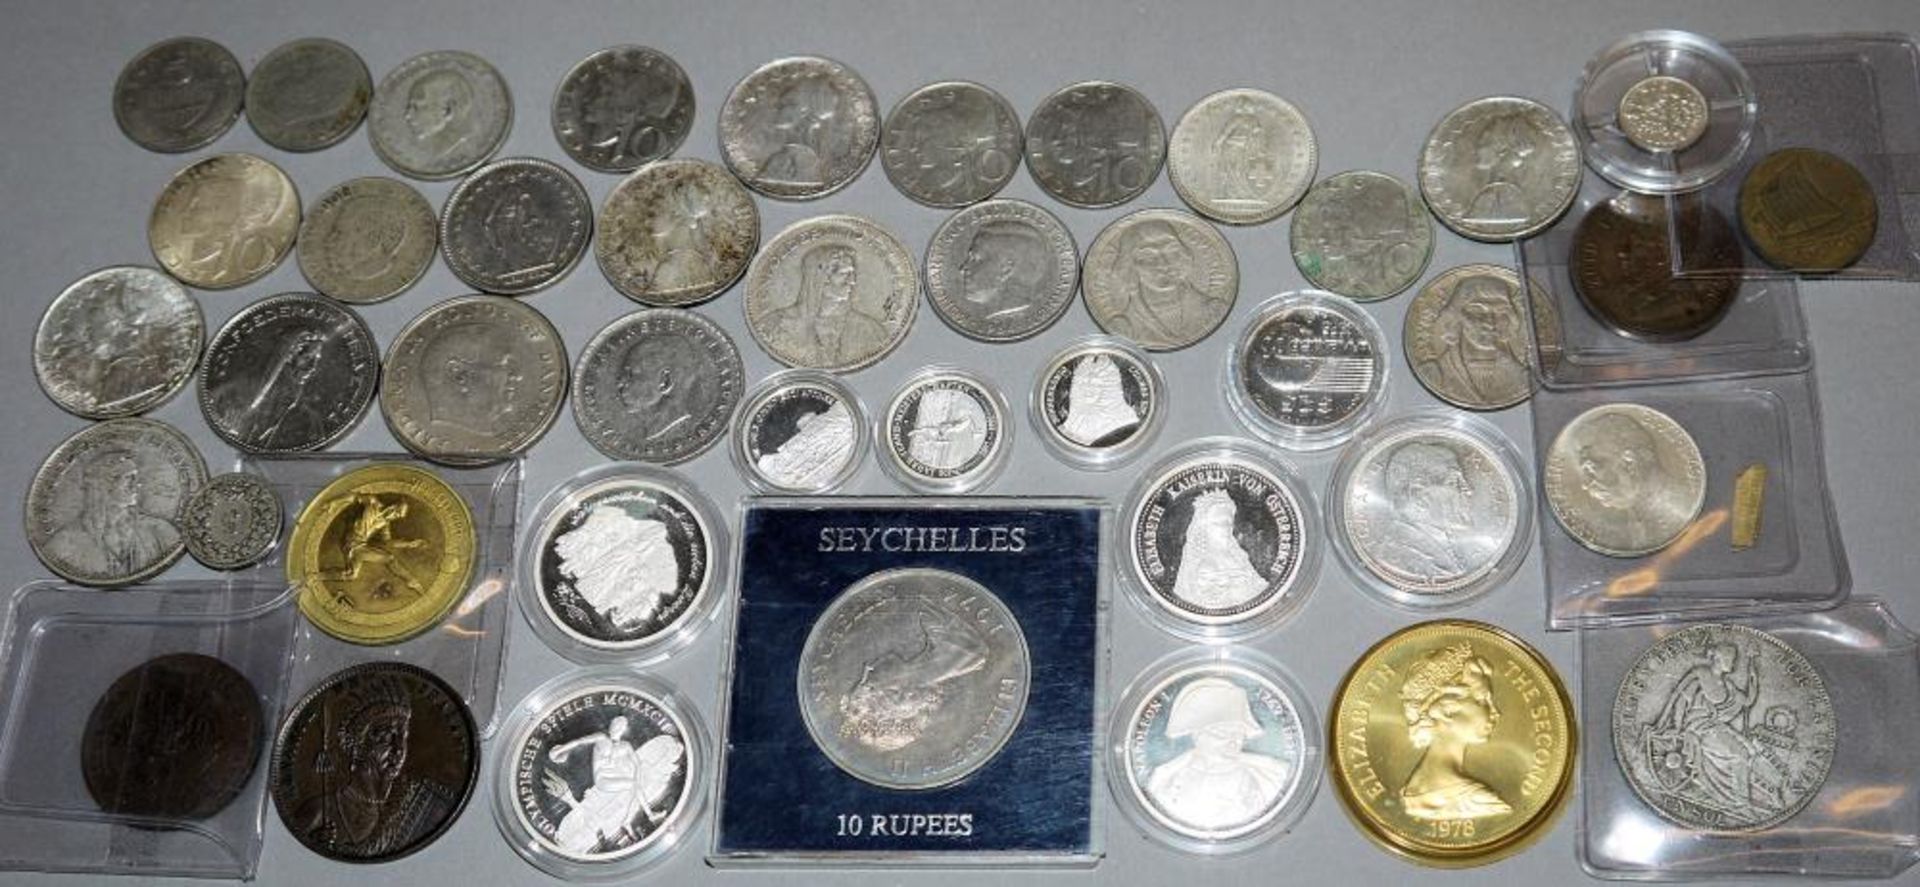 13 Silber – Gedenkmünzen & 25 ältere Silbermünzen alle Welt Napoleon I , Olympiade 1992, Tomas G.